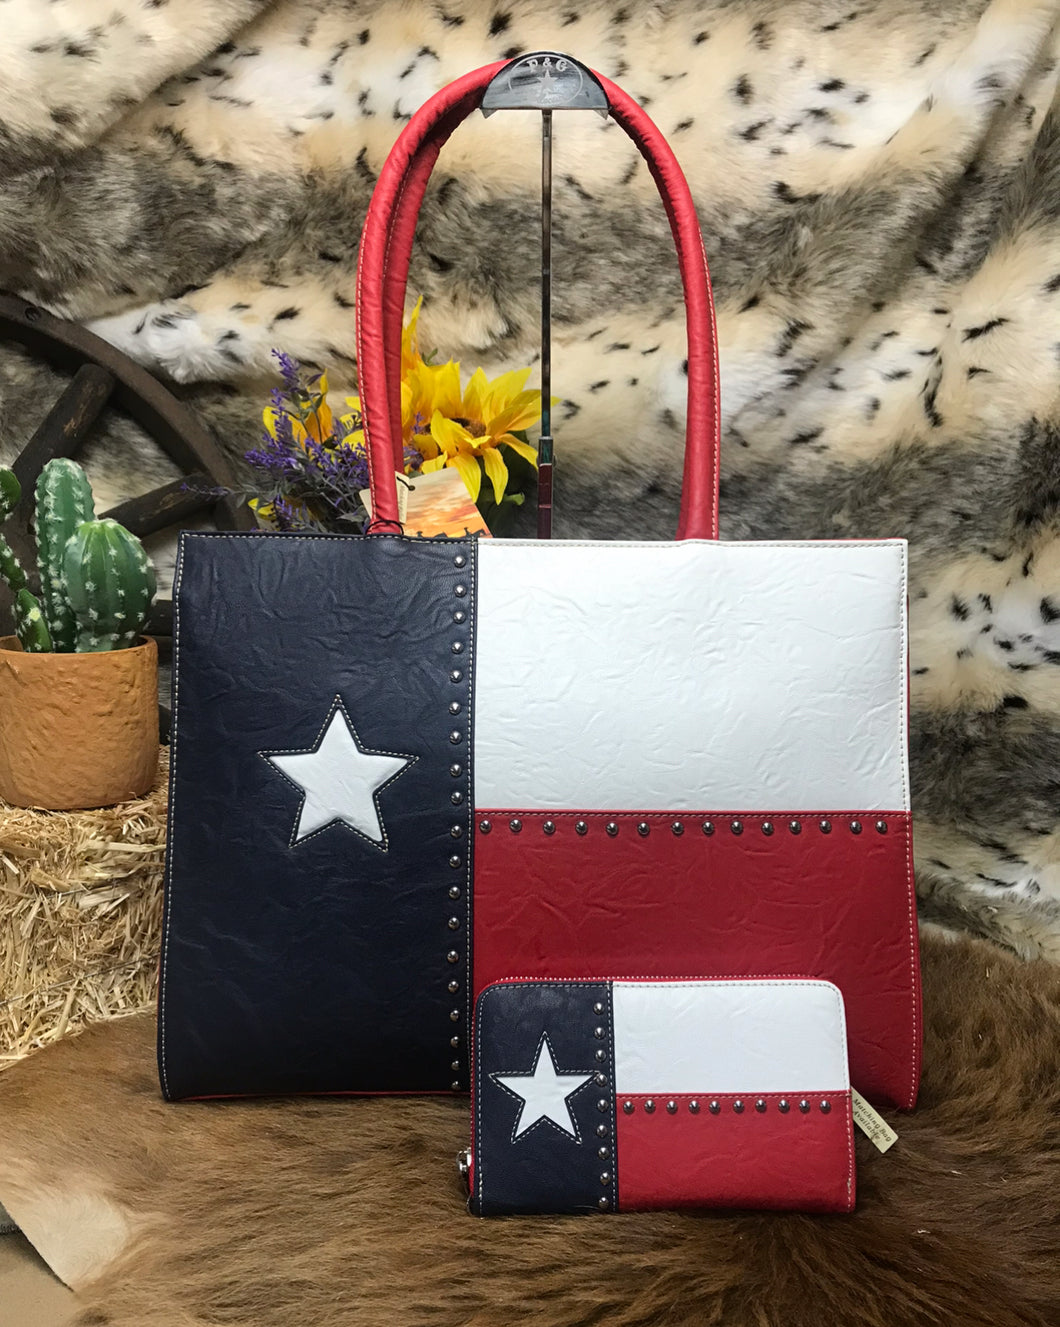 designer LV handbag style purse and wallet set